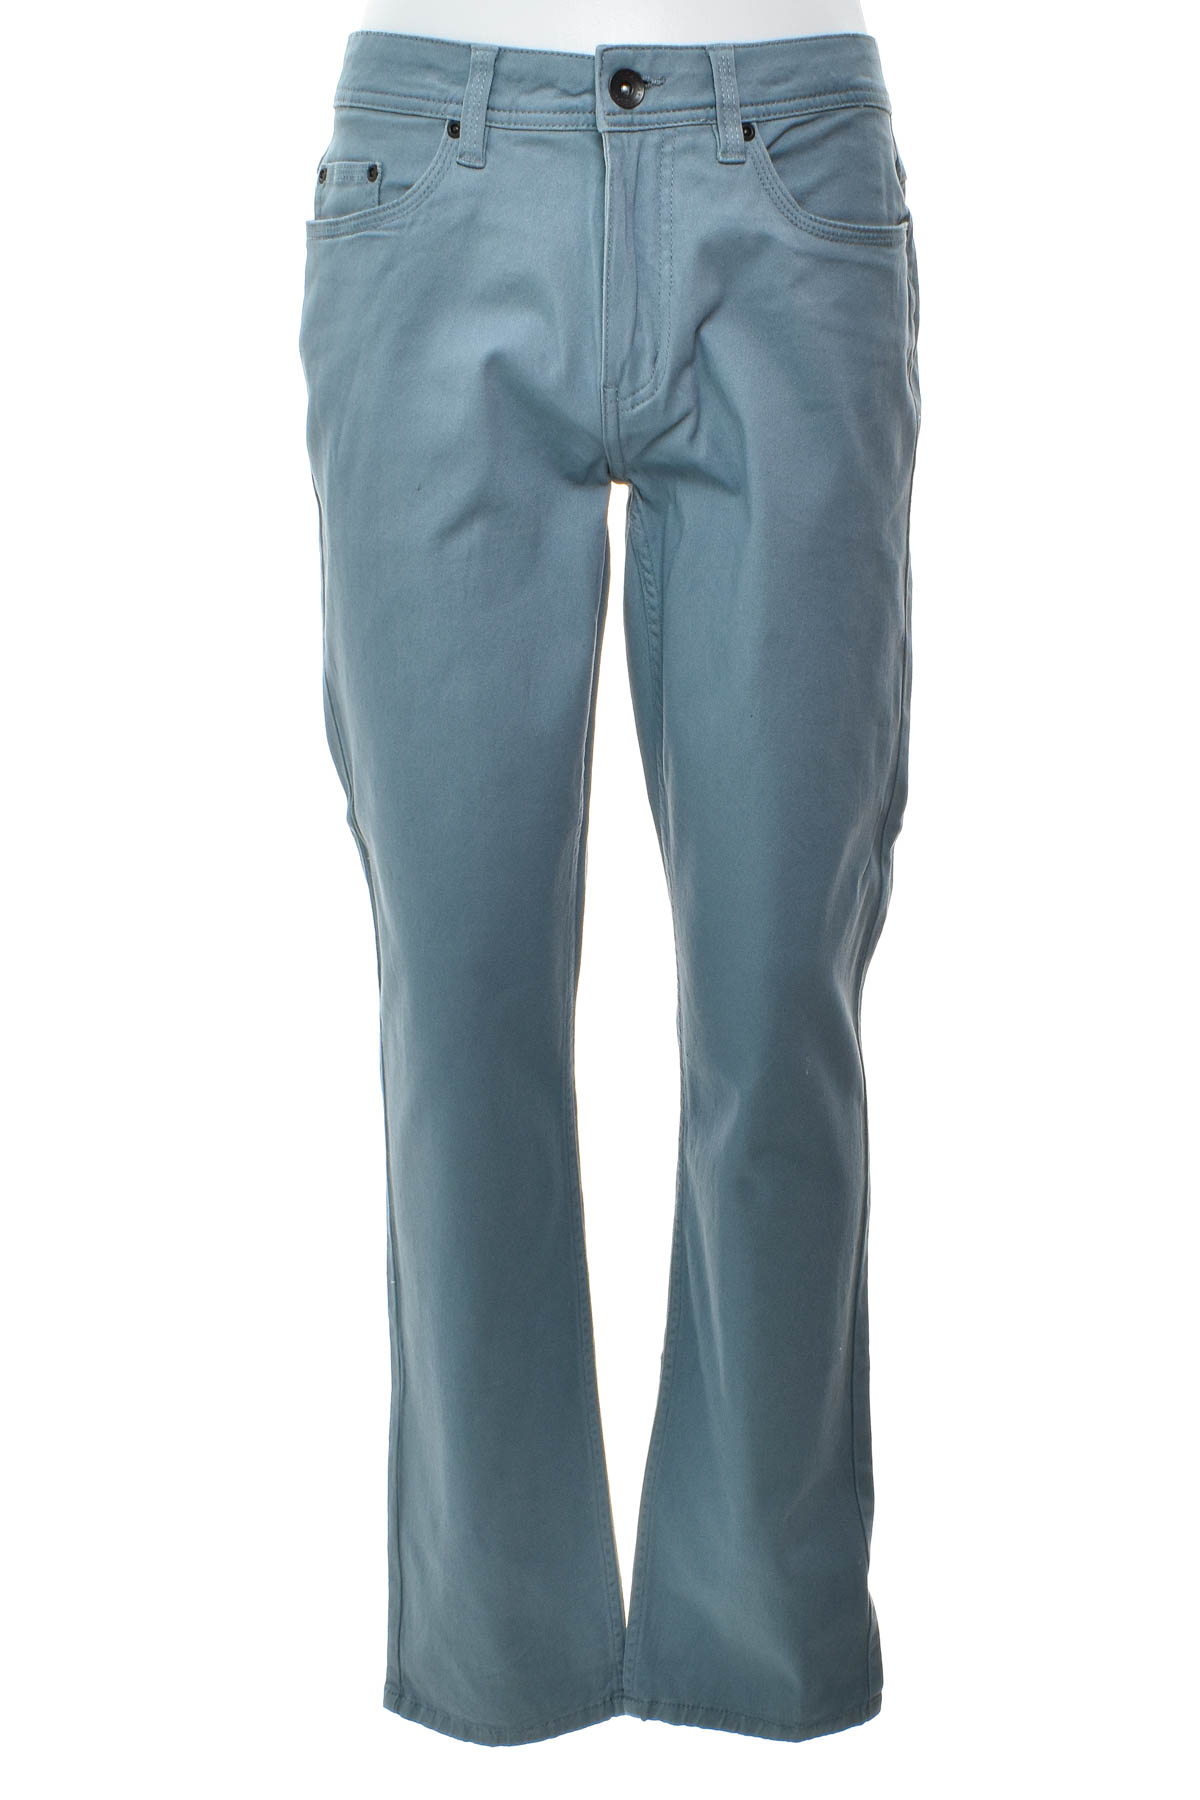 Pantalon pentru bărbați - MILLER&MONROE - 0